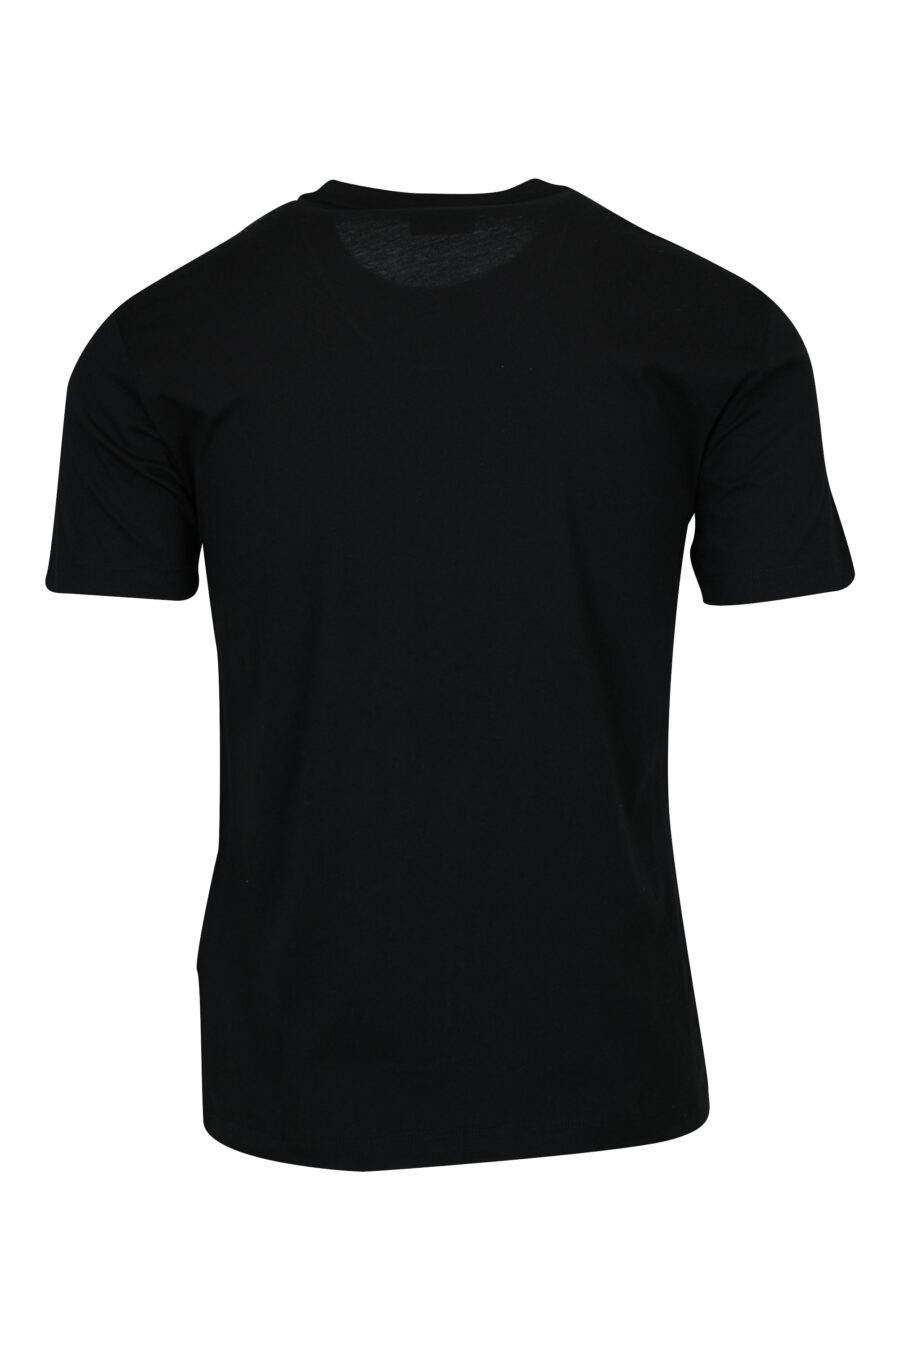 T-shirt noir avec maxilogo "lux identity" en dégradé - 8058947508099 1